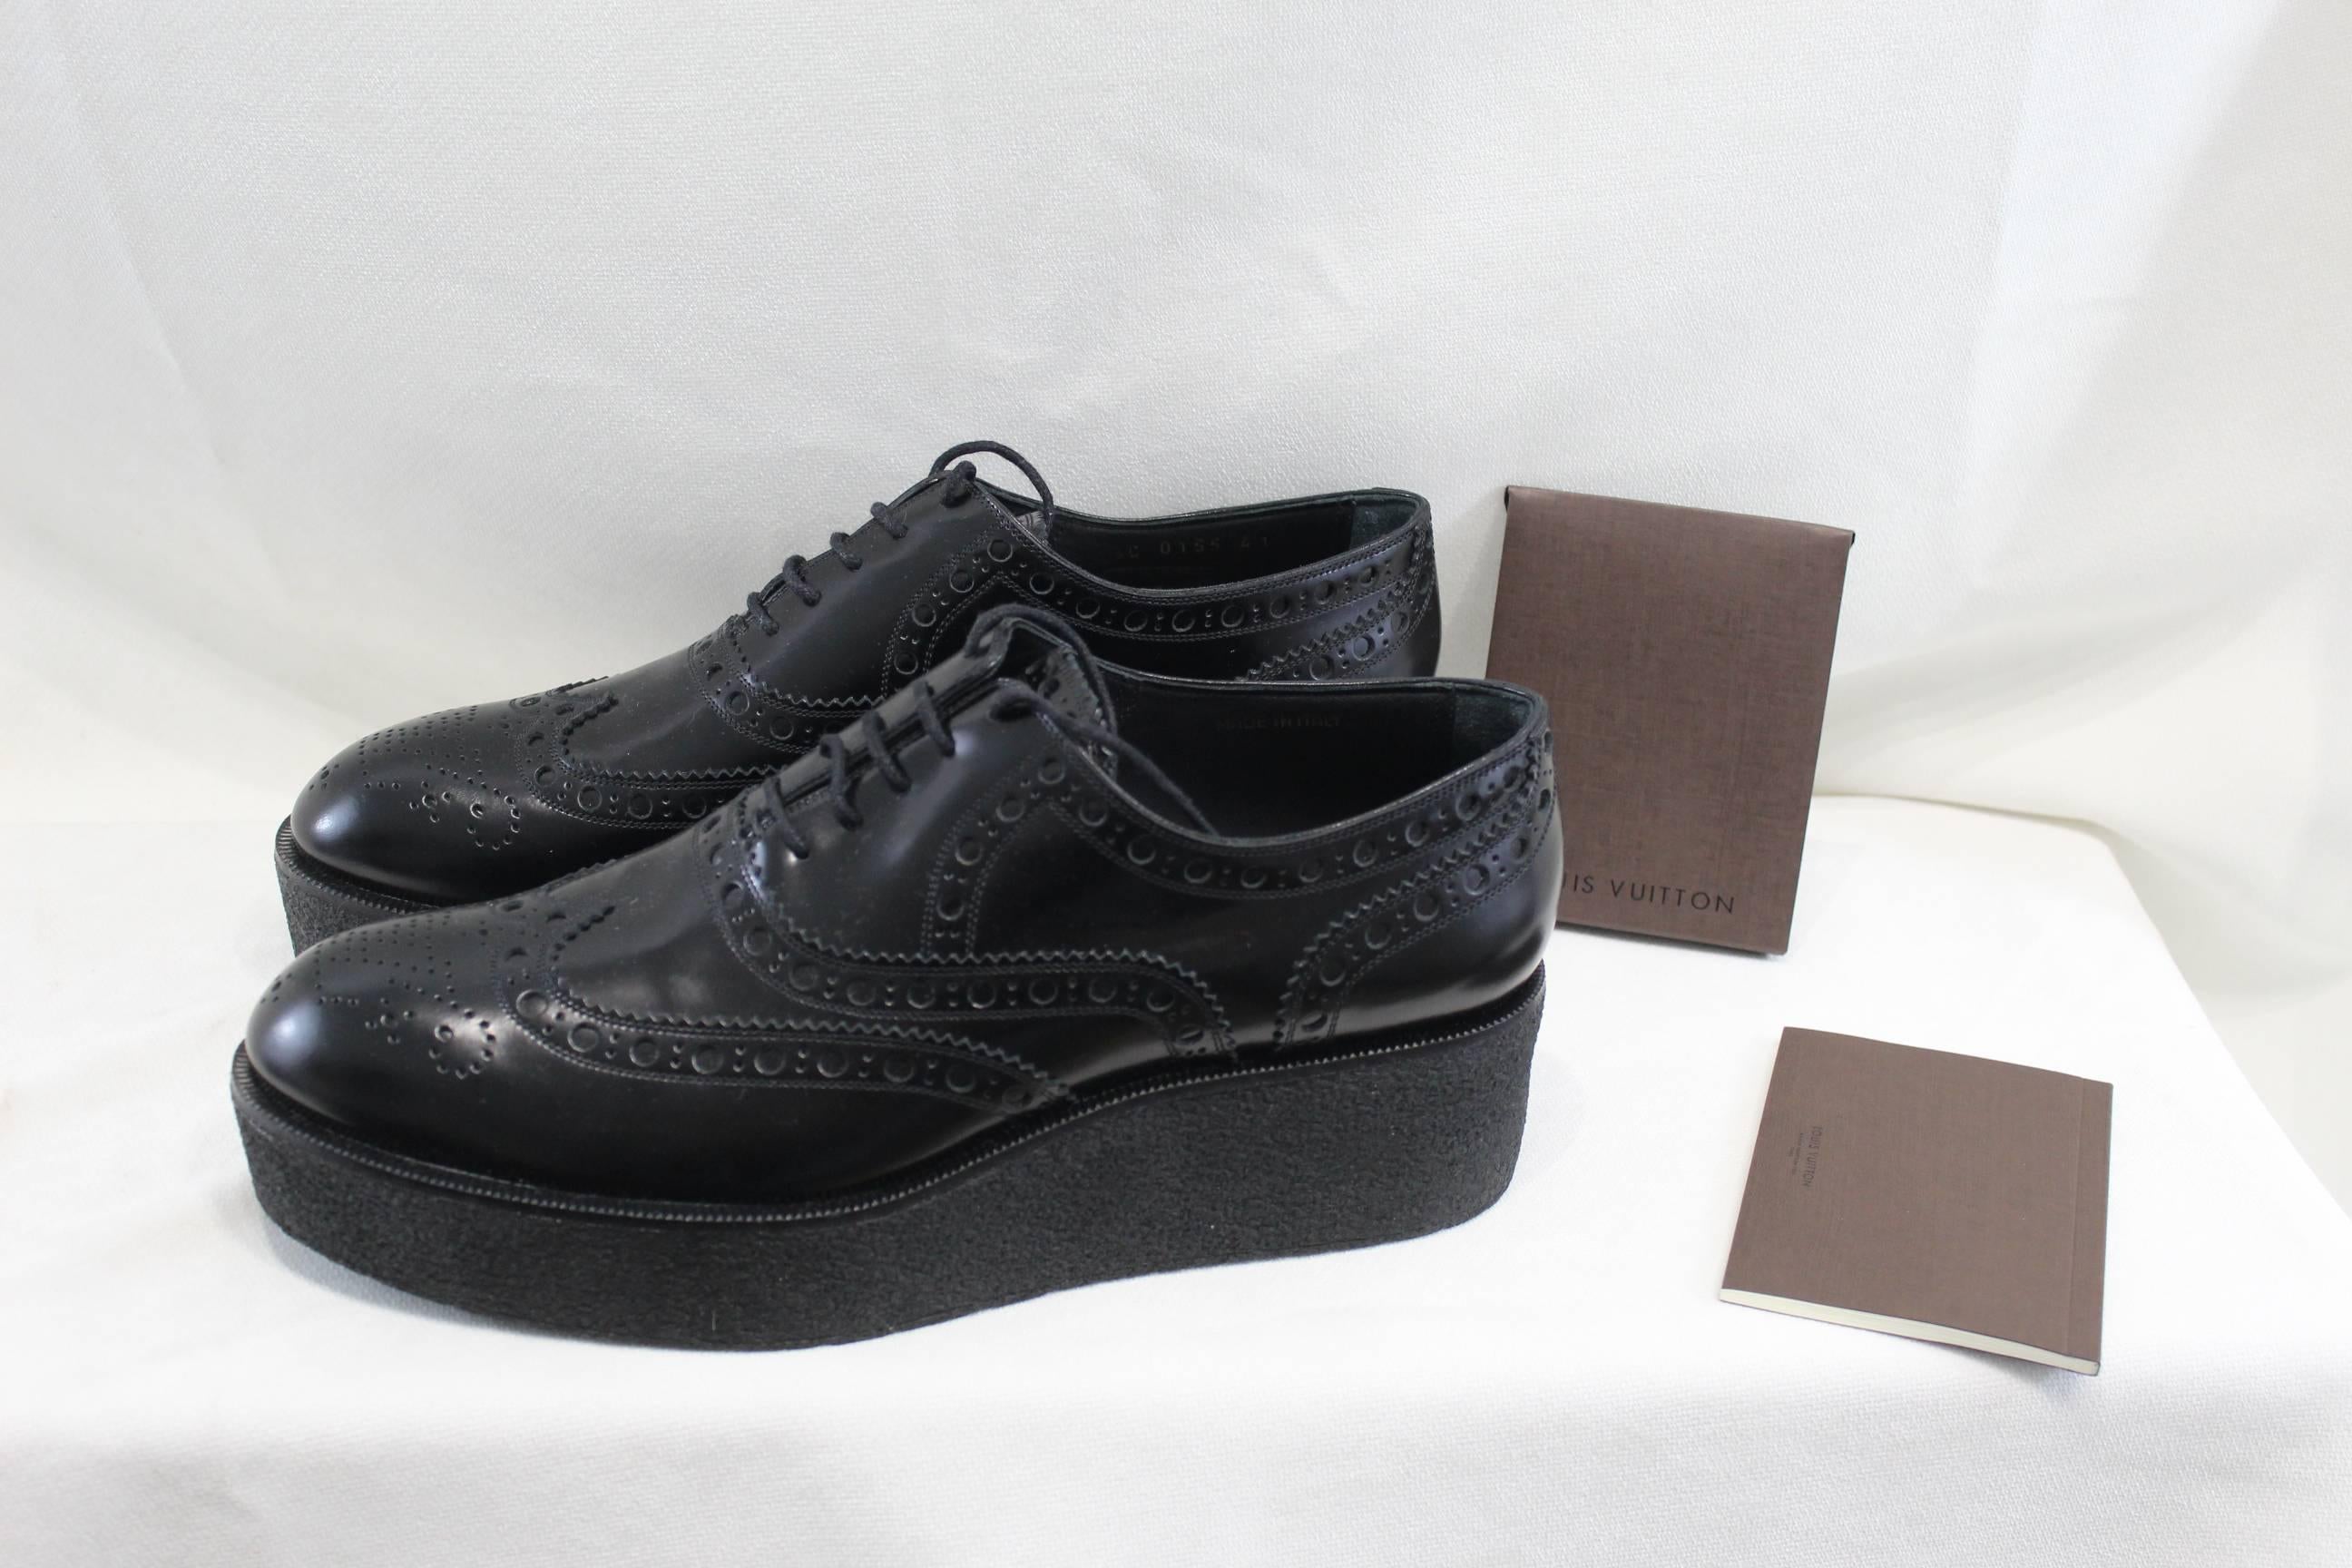 2015 Like New Louis Vuitton Black Dernie Shoes. Size 7, 5 1